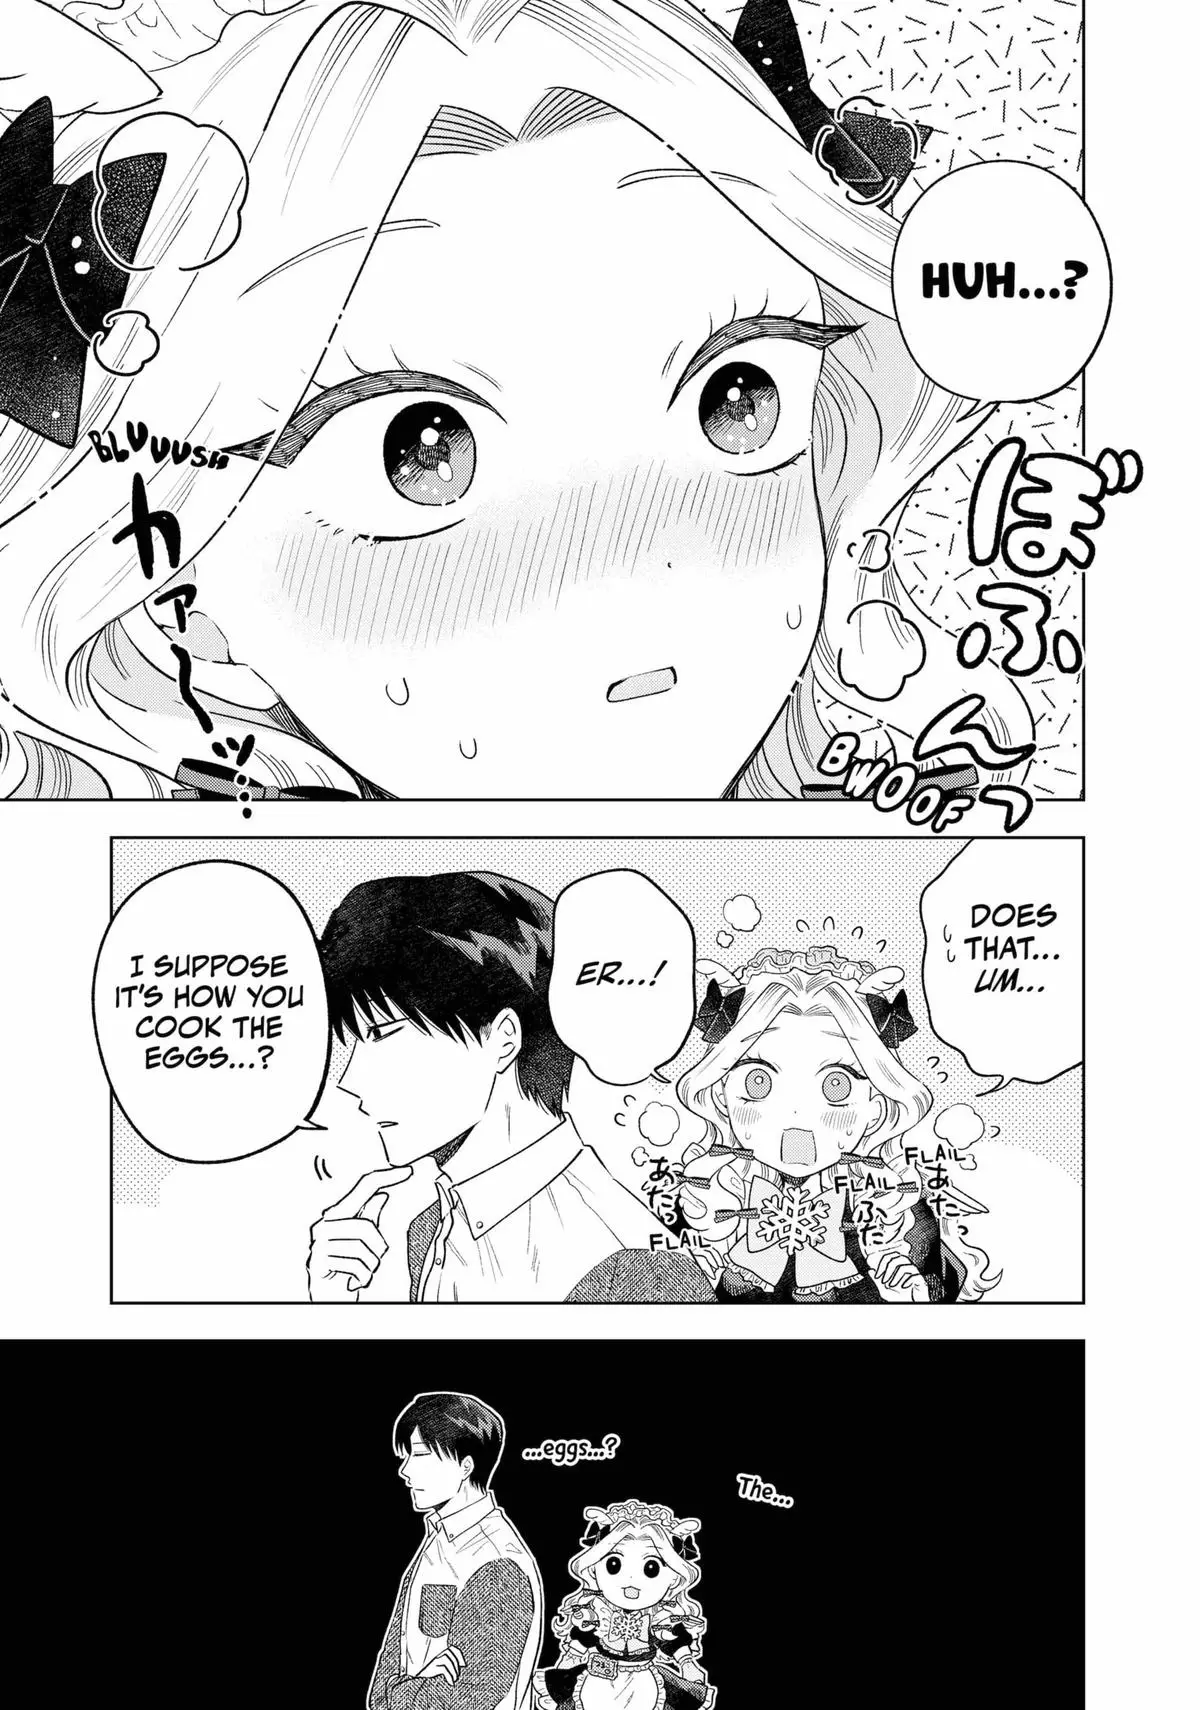 Tsuruko Returns The Favor - 5 page 19-be5d683f